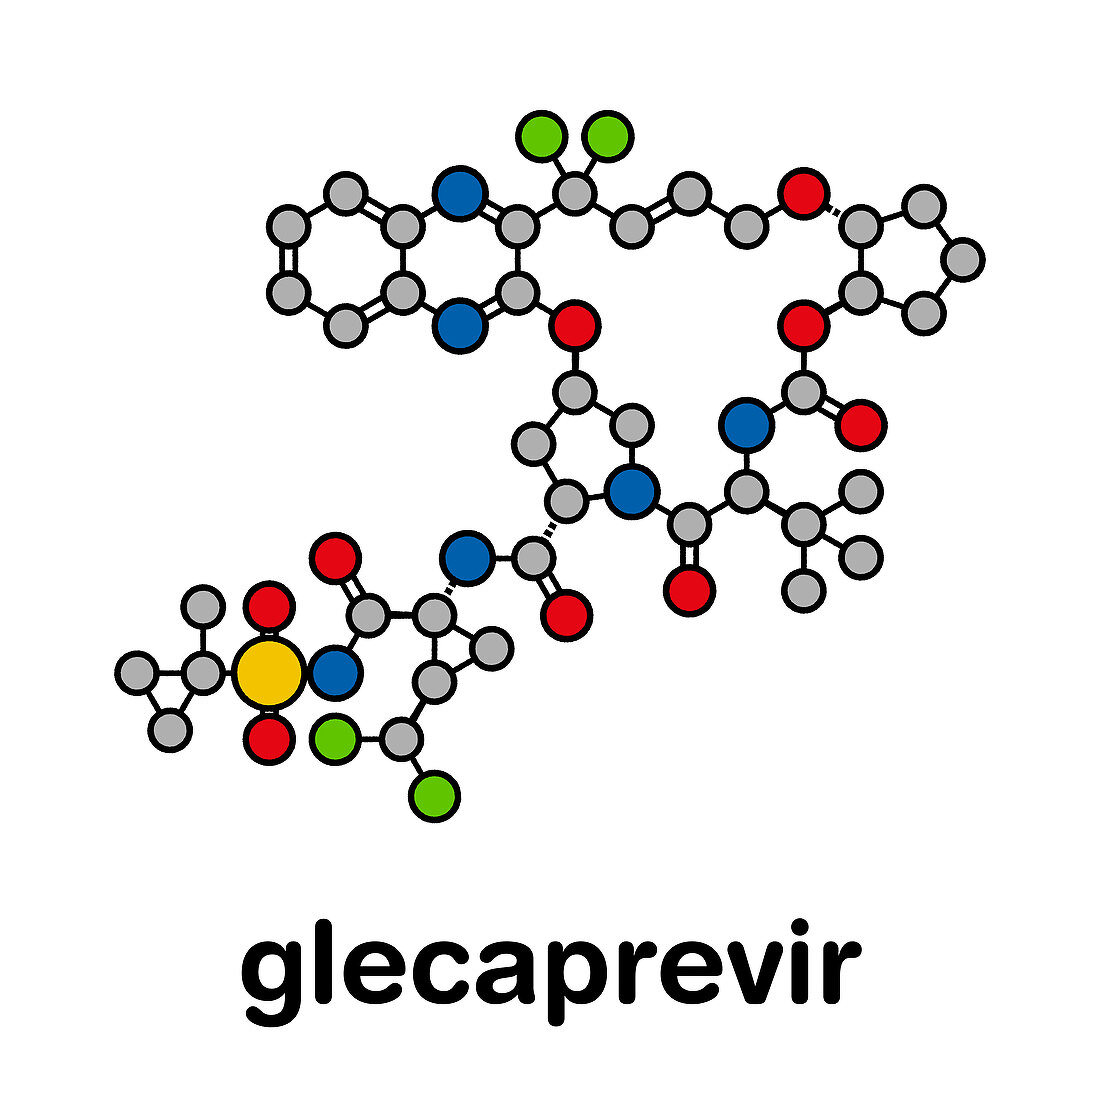 Glecaprevir hepatitis C virus drug molecule, illustration